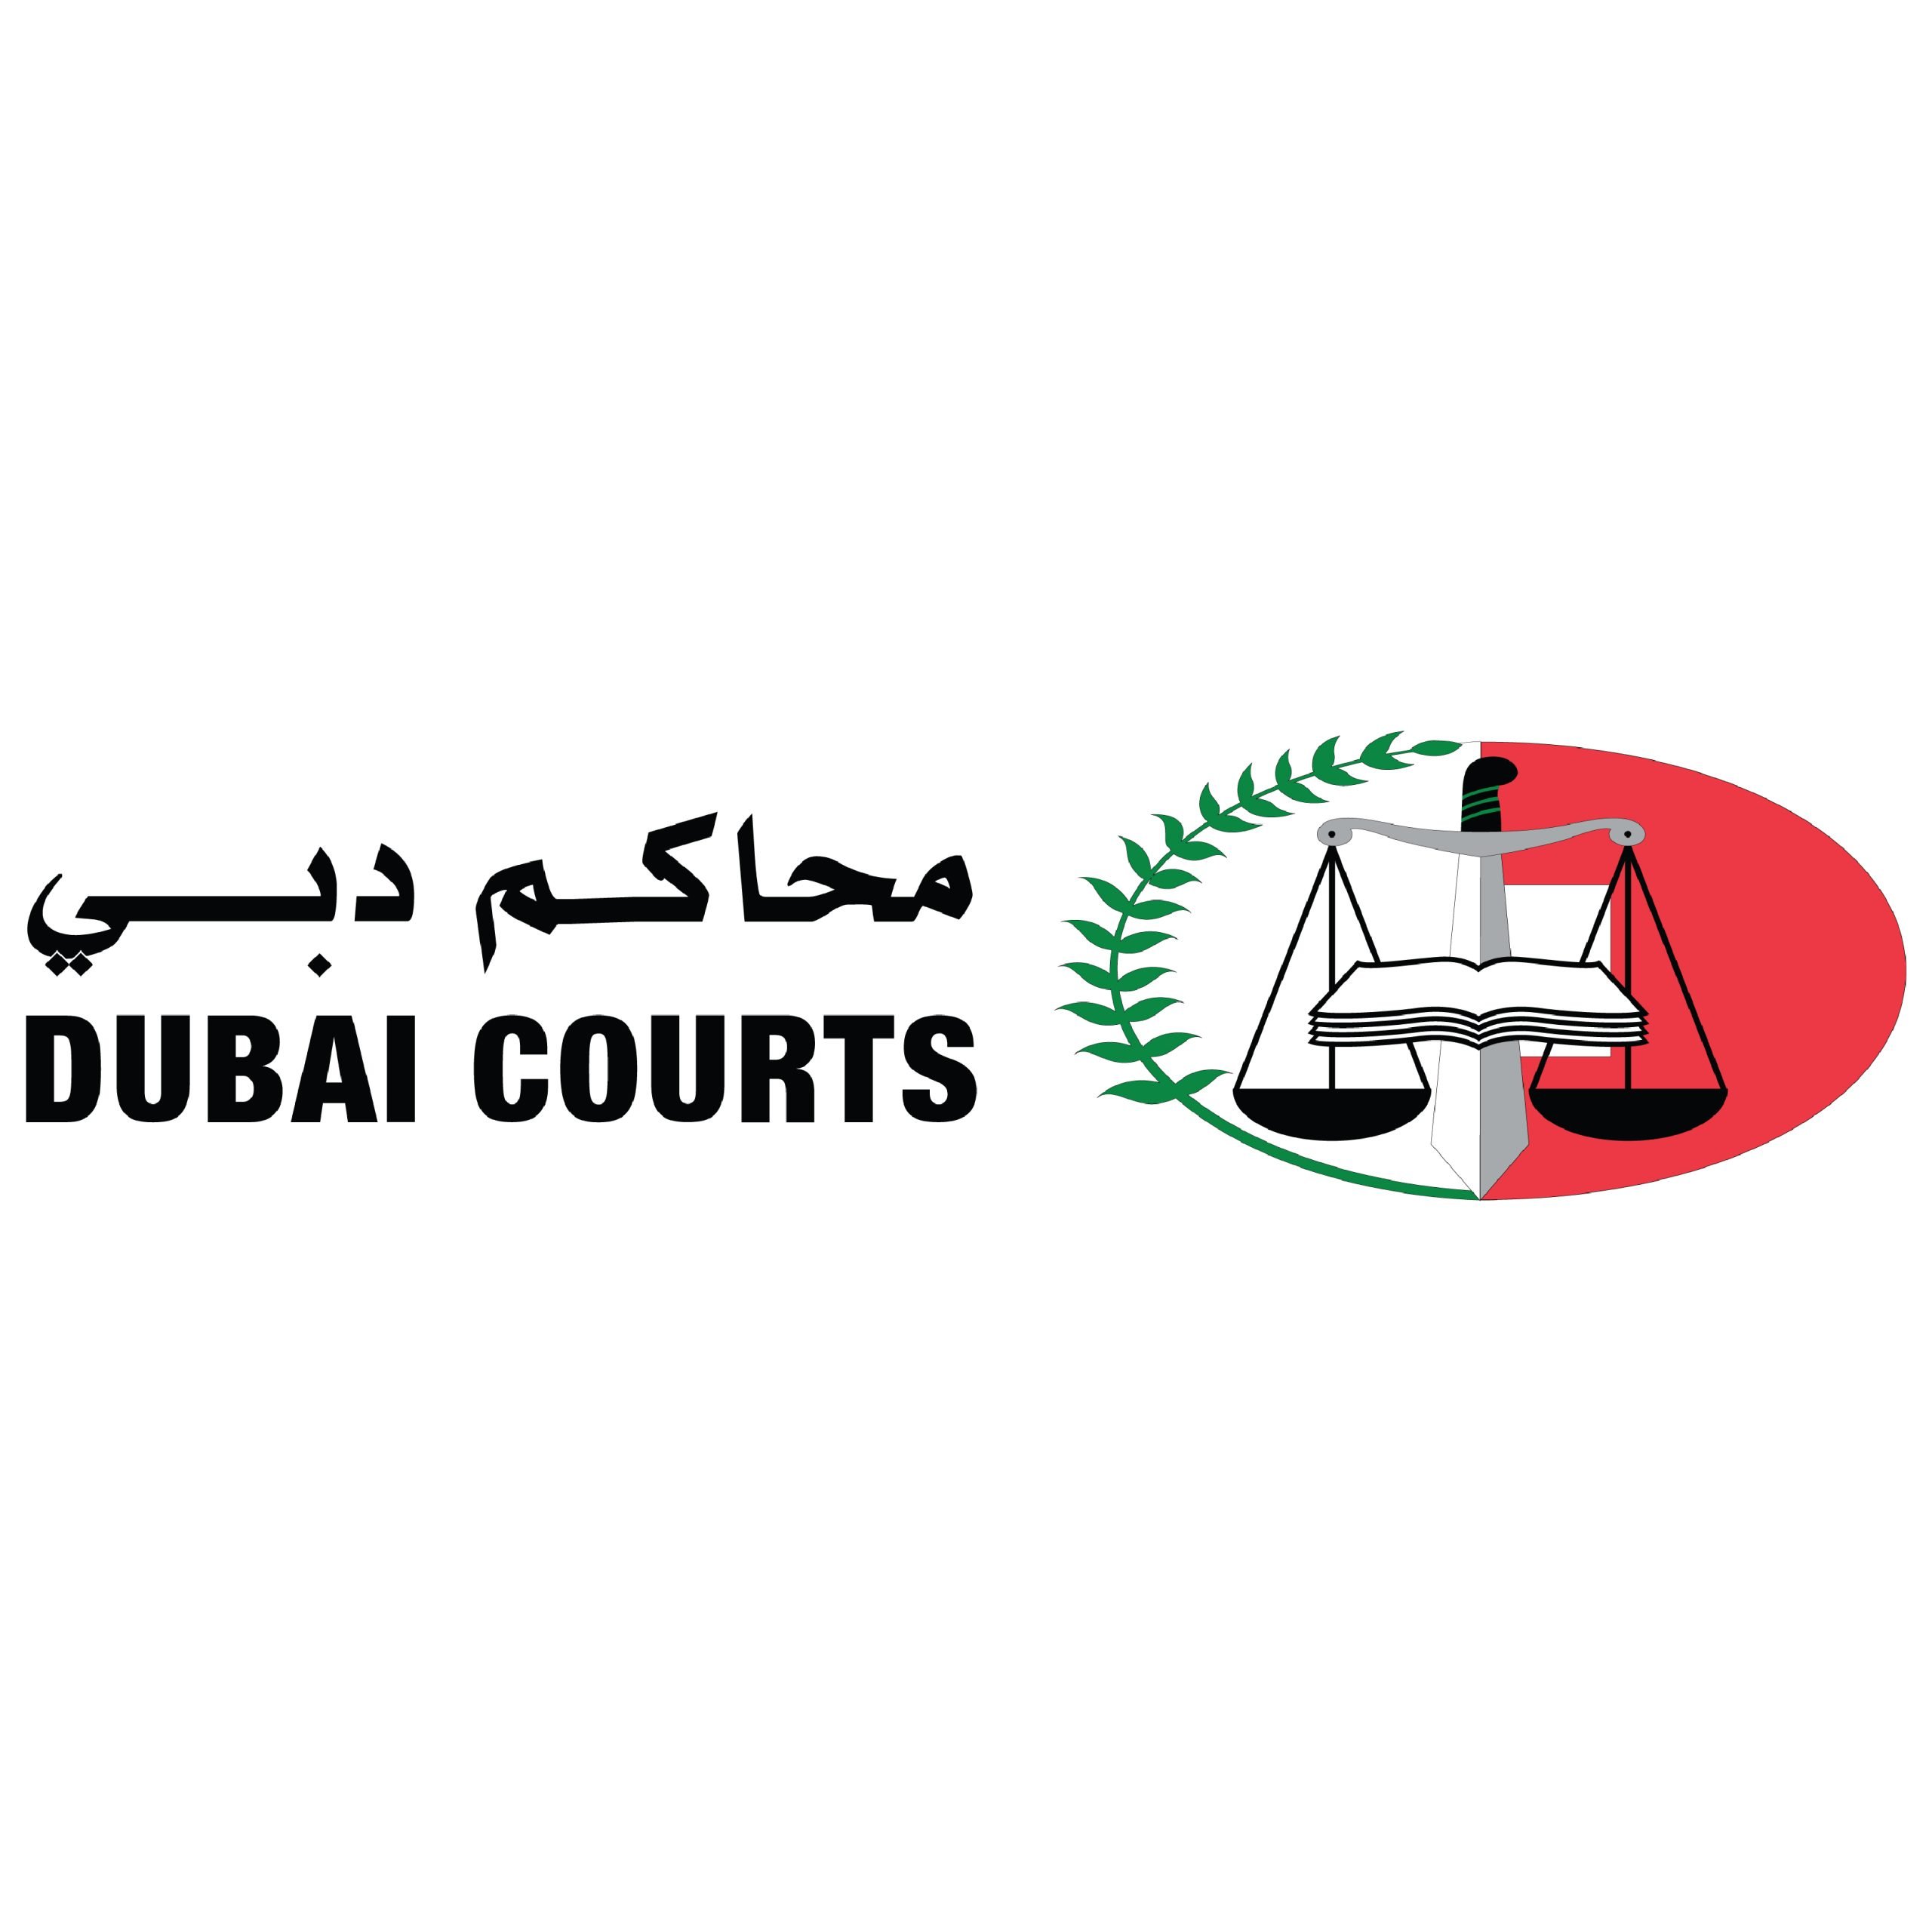 Dubai Courts Logo official-01